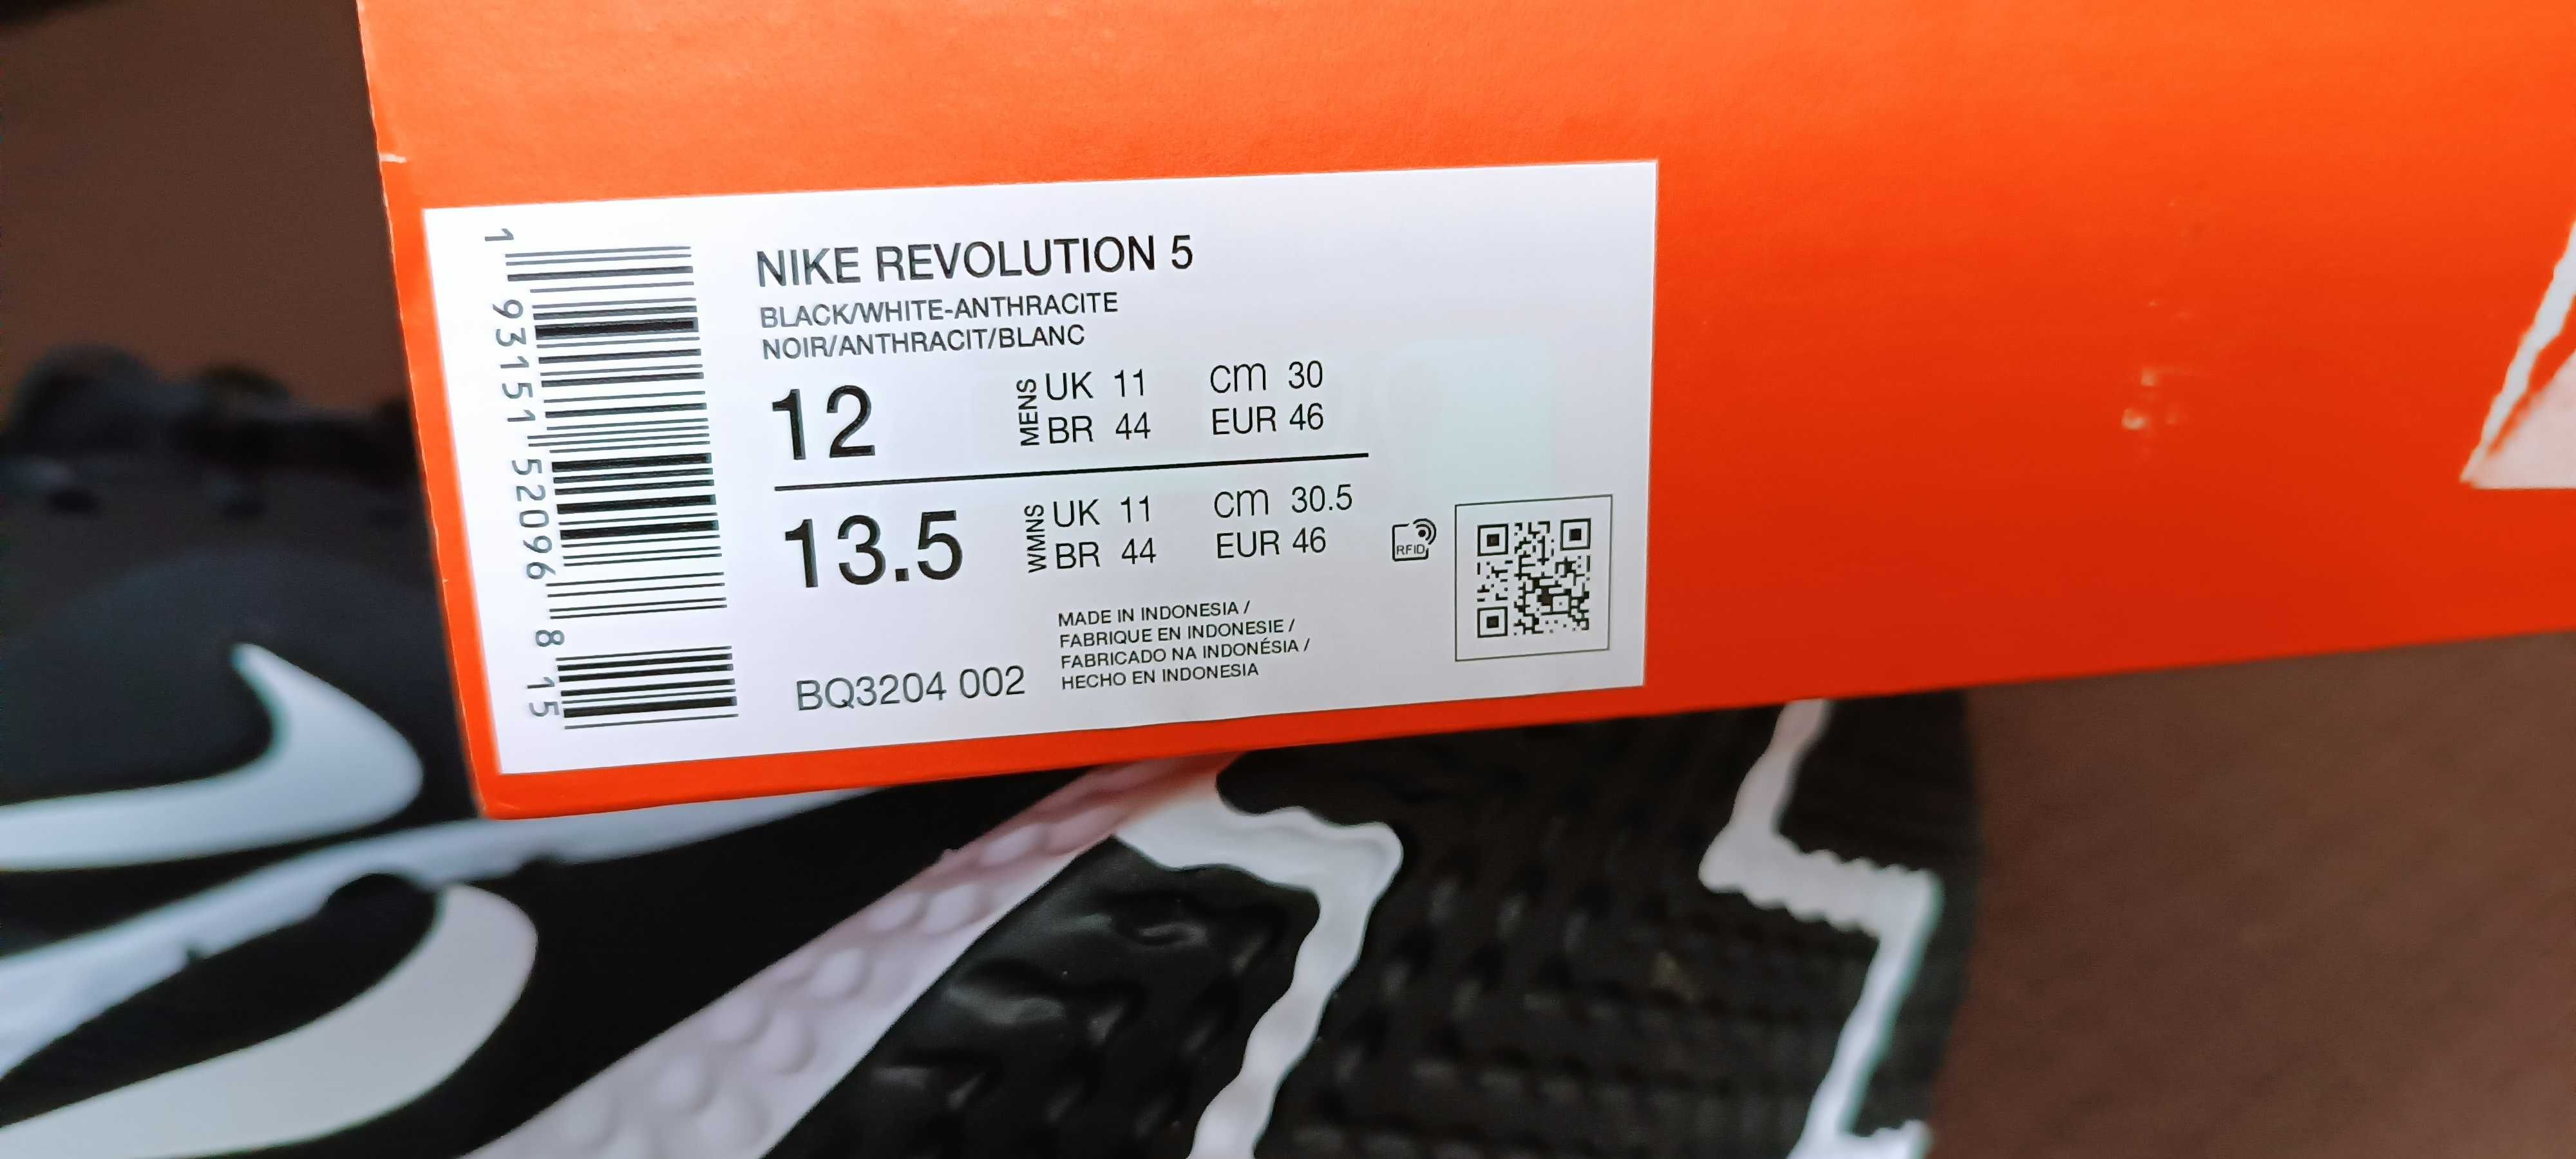 (r. 46) Nike Revolution 5 Black/White kod Nike BQ3204,-002